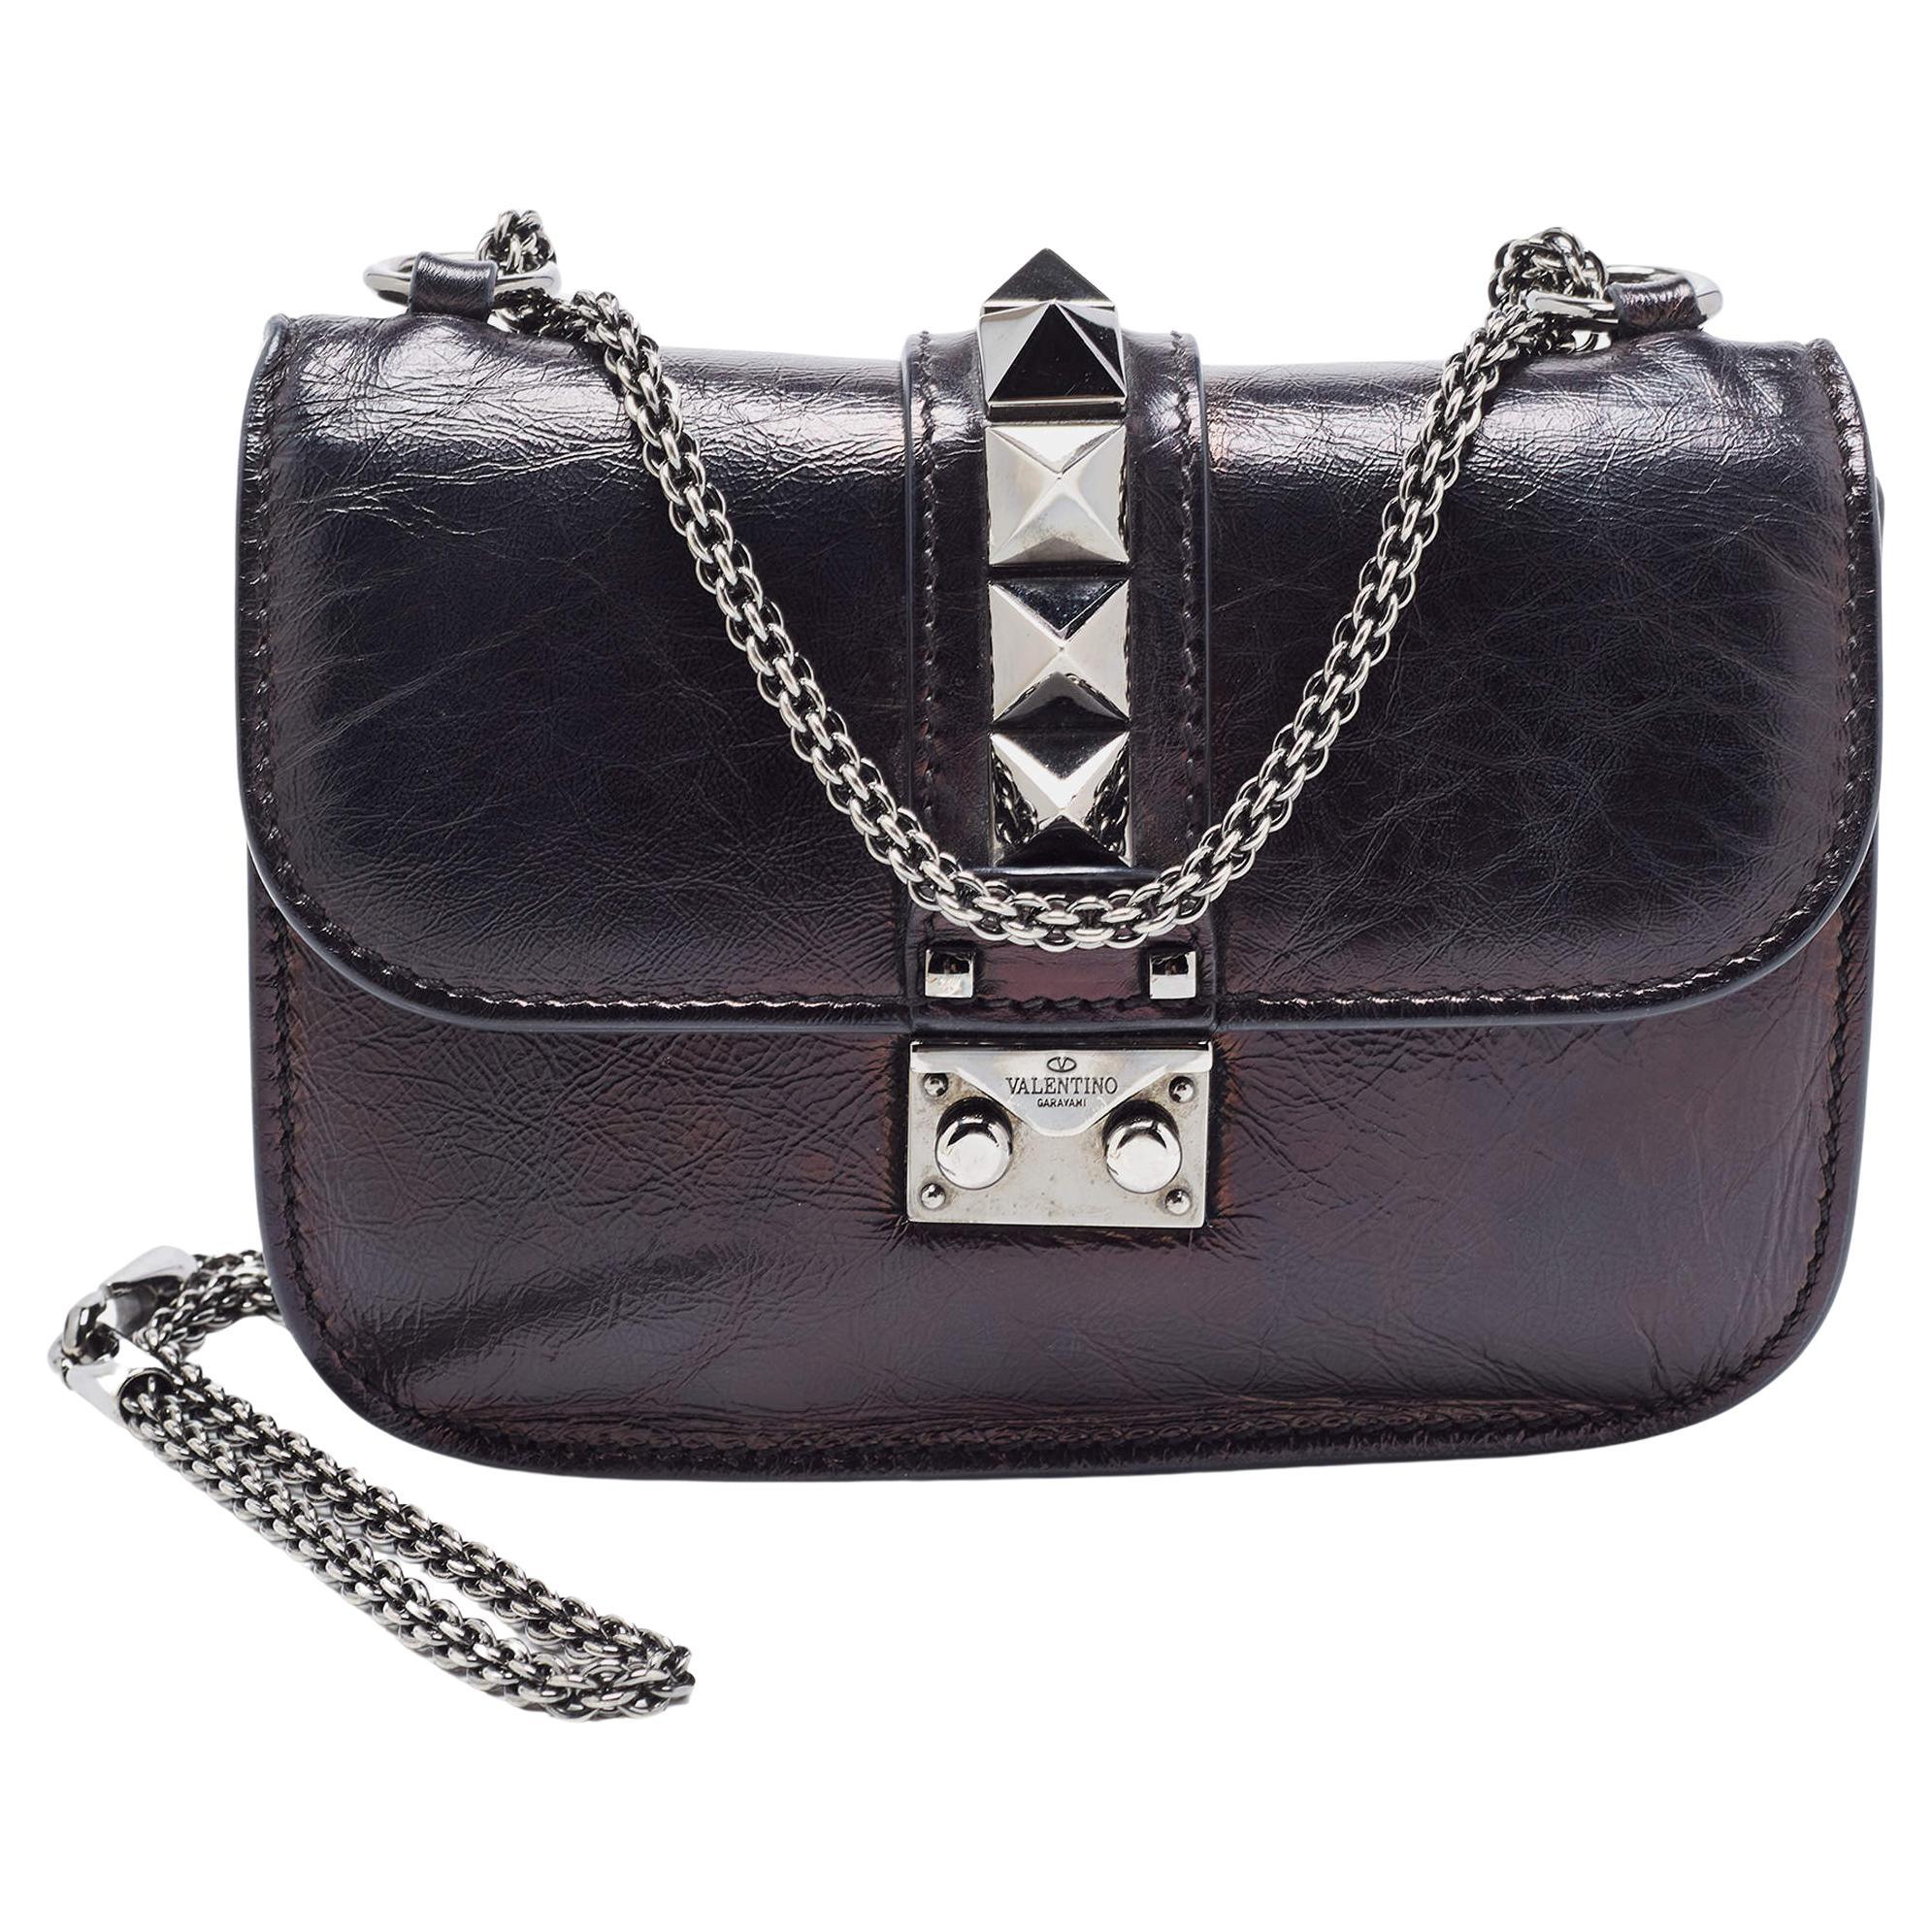 Valentino Black Leather Small Rockstud Glam Lock Flap Bag